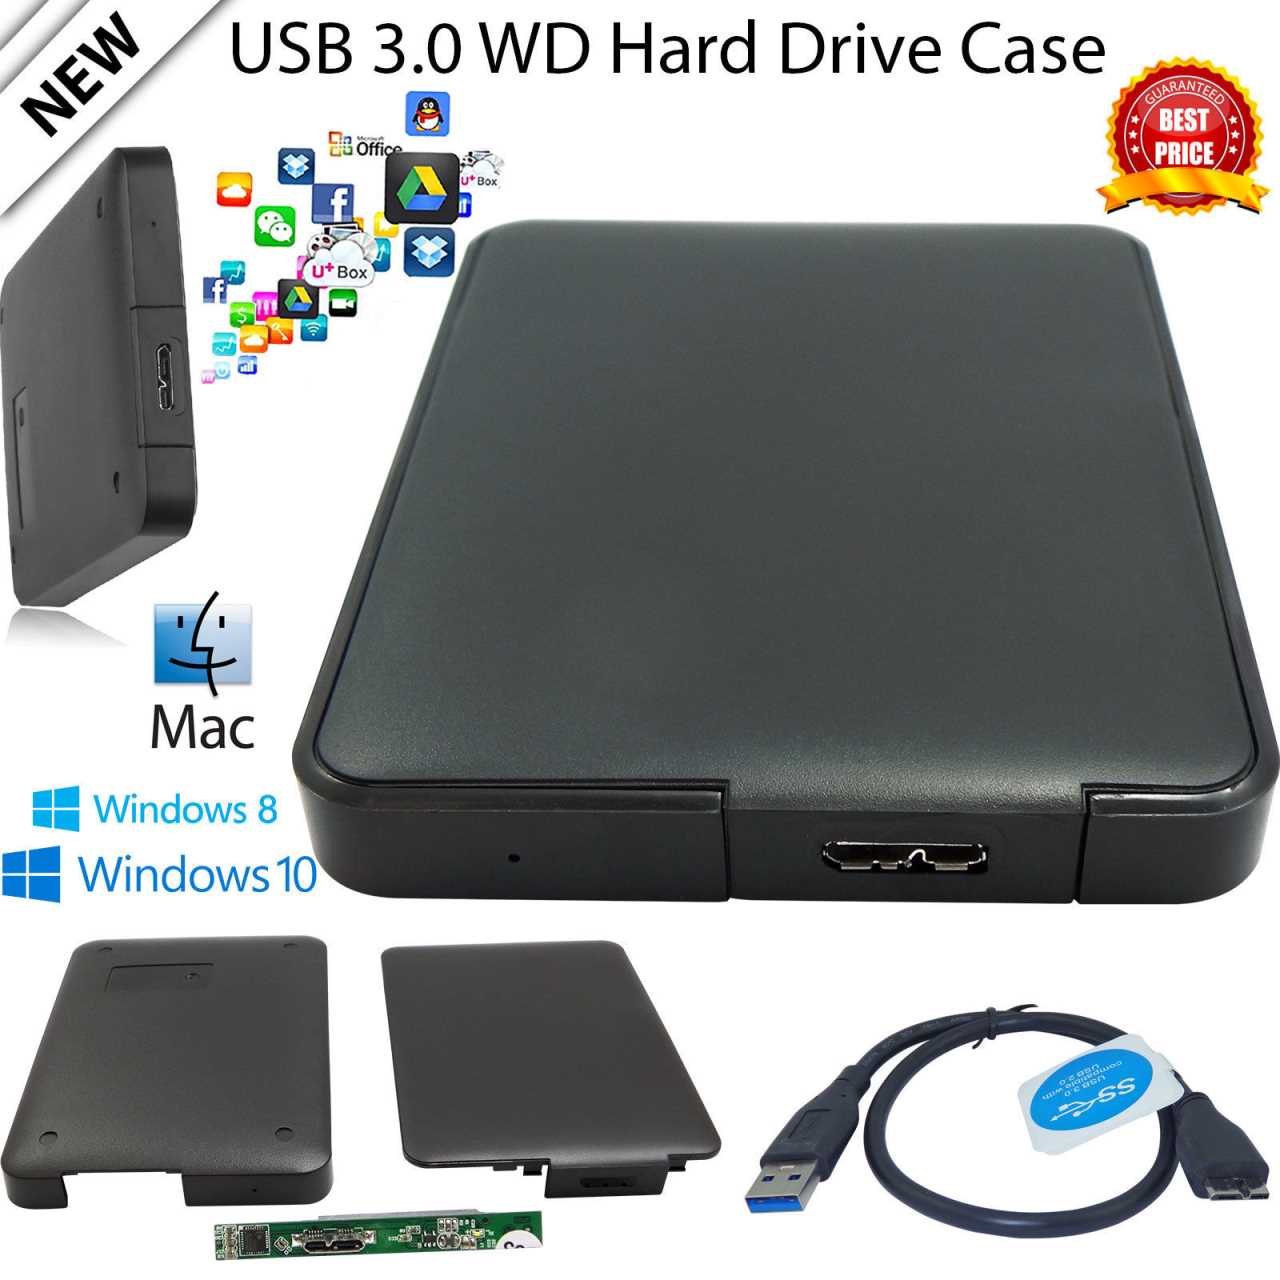 USB 3.0 SATA HDD 2.5 inch External Hard Drive Enclosure Case Caddy